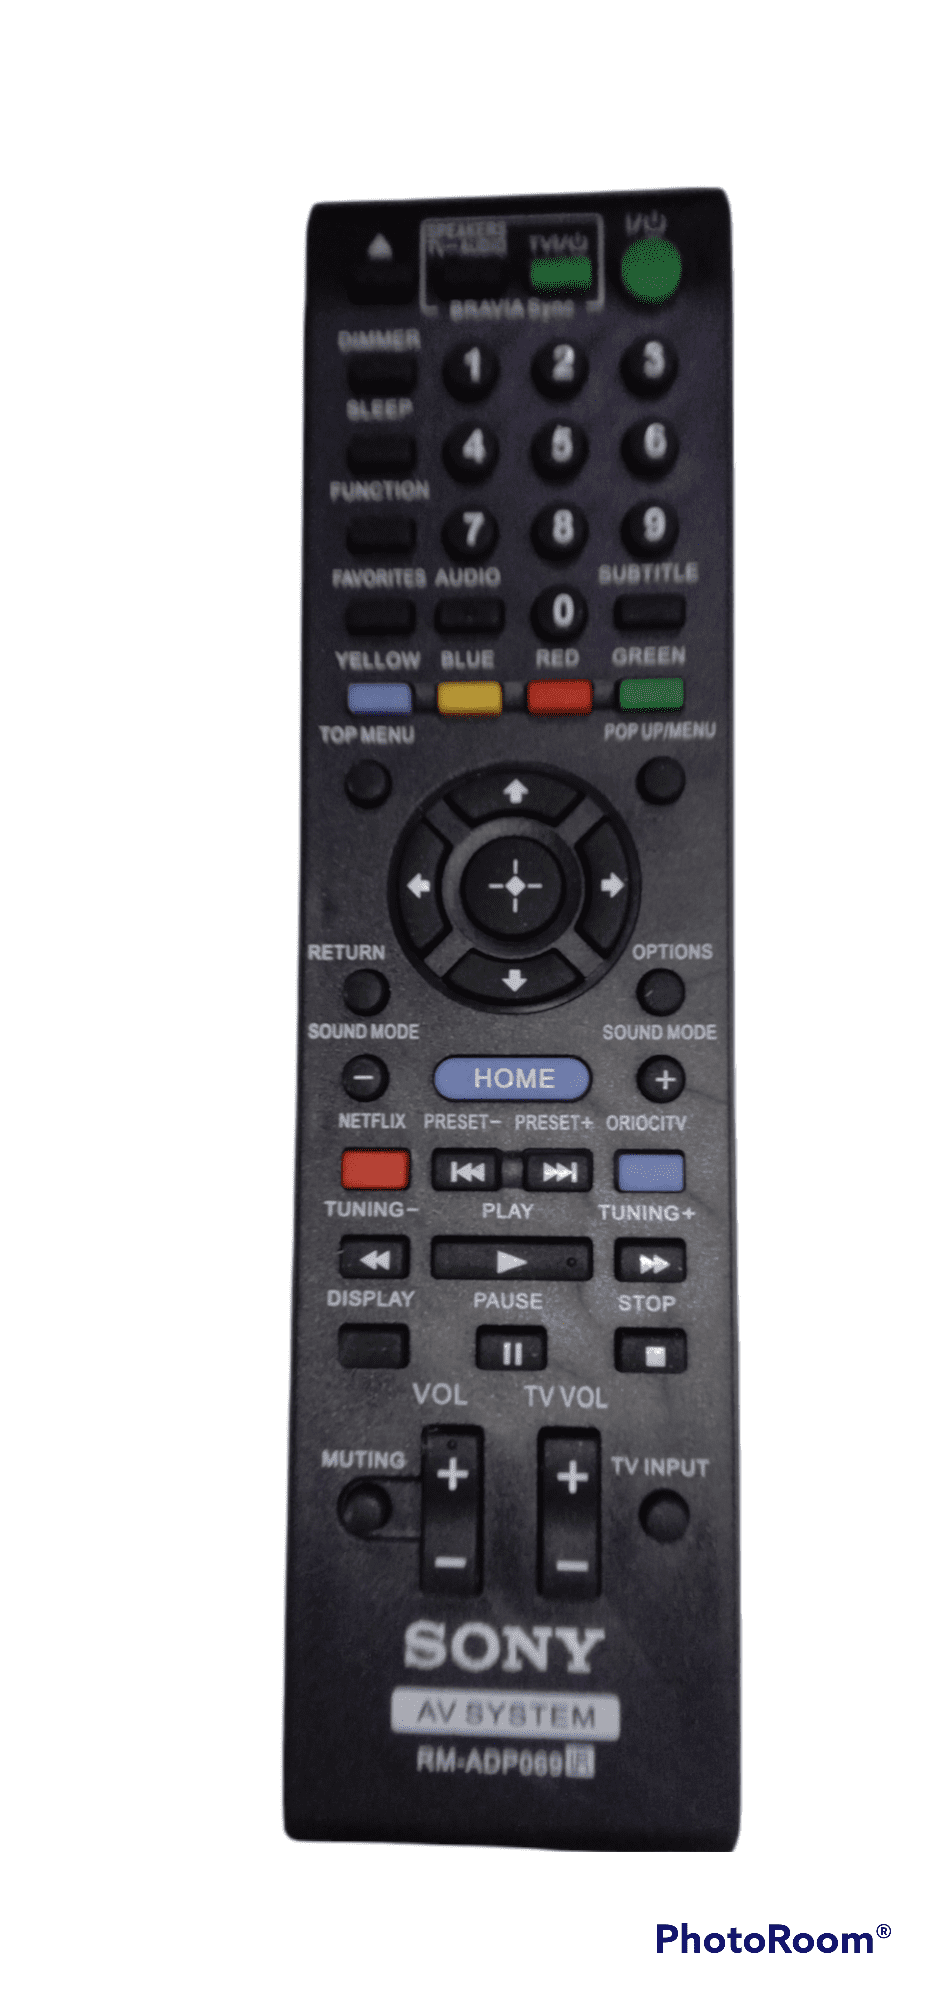 Sony Blue Ray Av system Remote Control RM-ADP069 * Compatible*High Sensitivity - Faritha